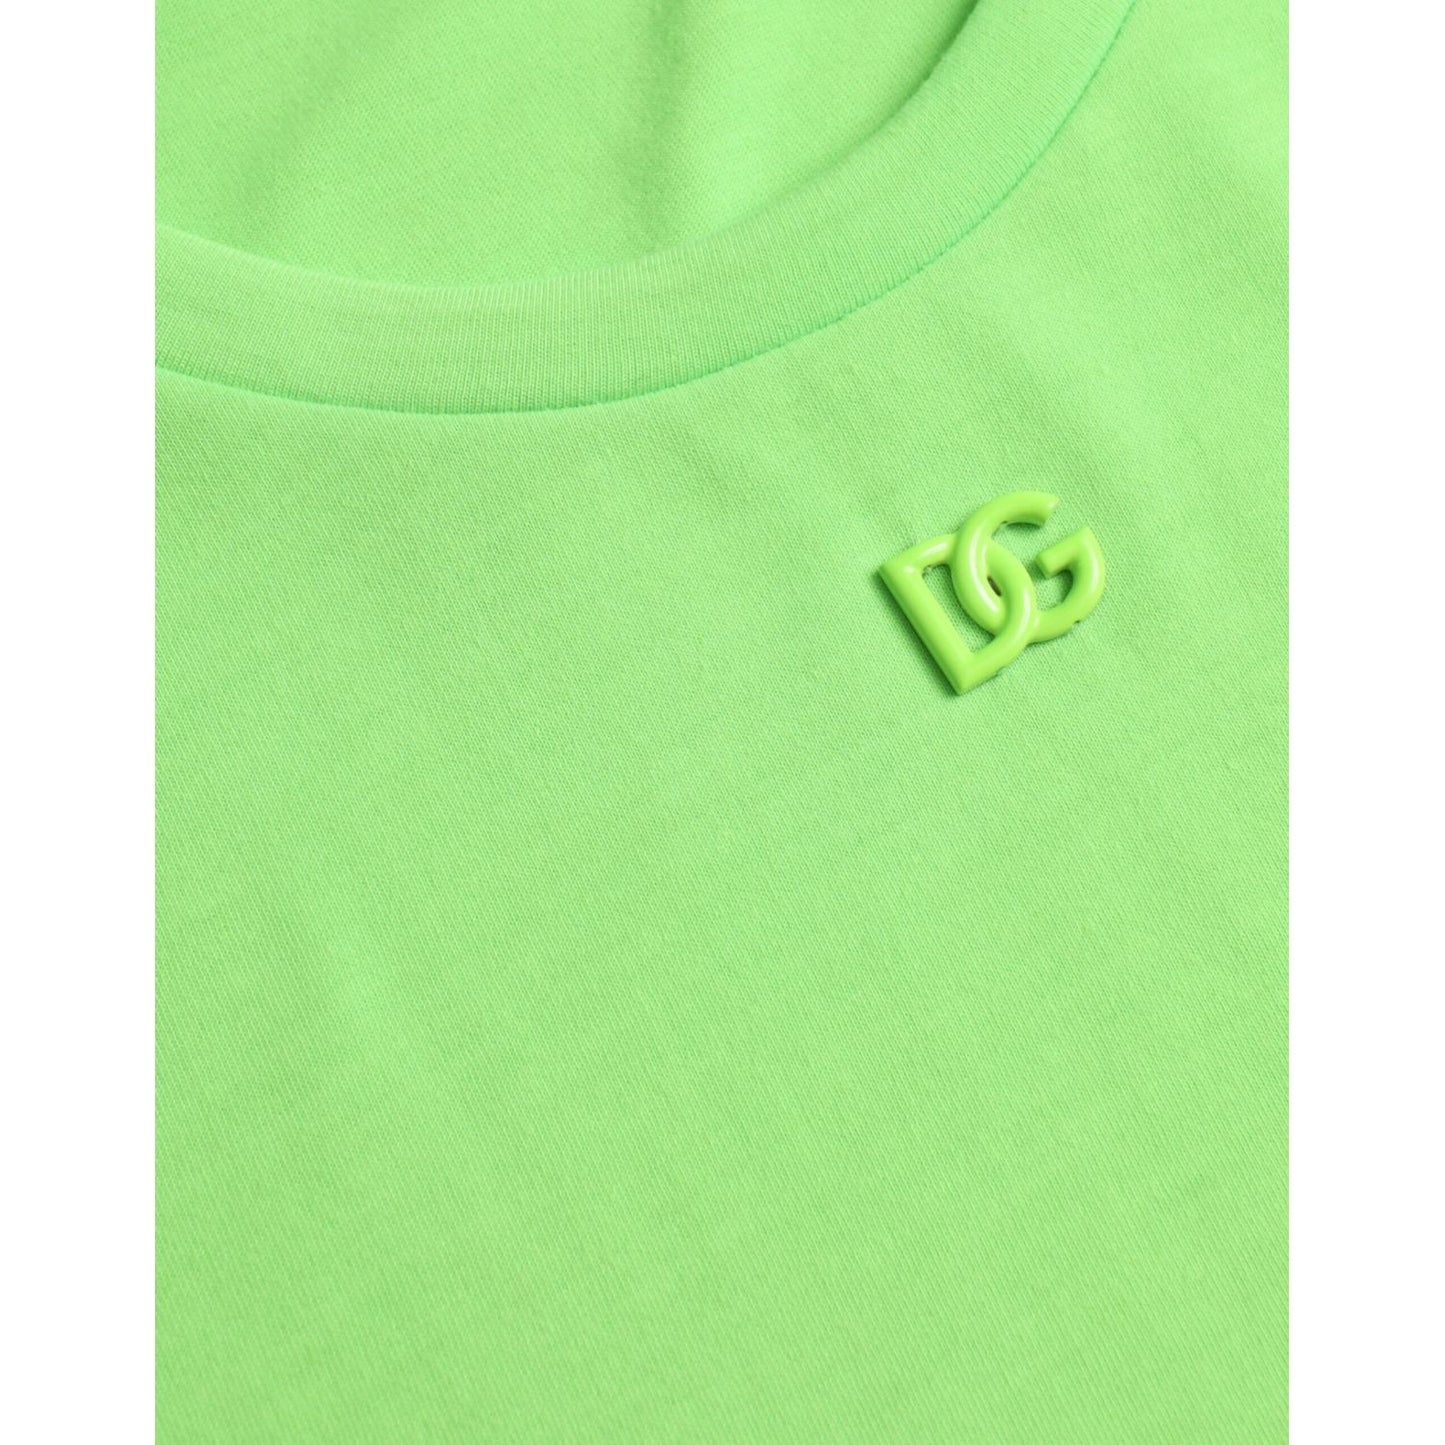 Dolce & Gabbana Neon Green Embossed Logo Crew Neck T-shirt neon-green-embossed-logo-crew-neck-t-shirt